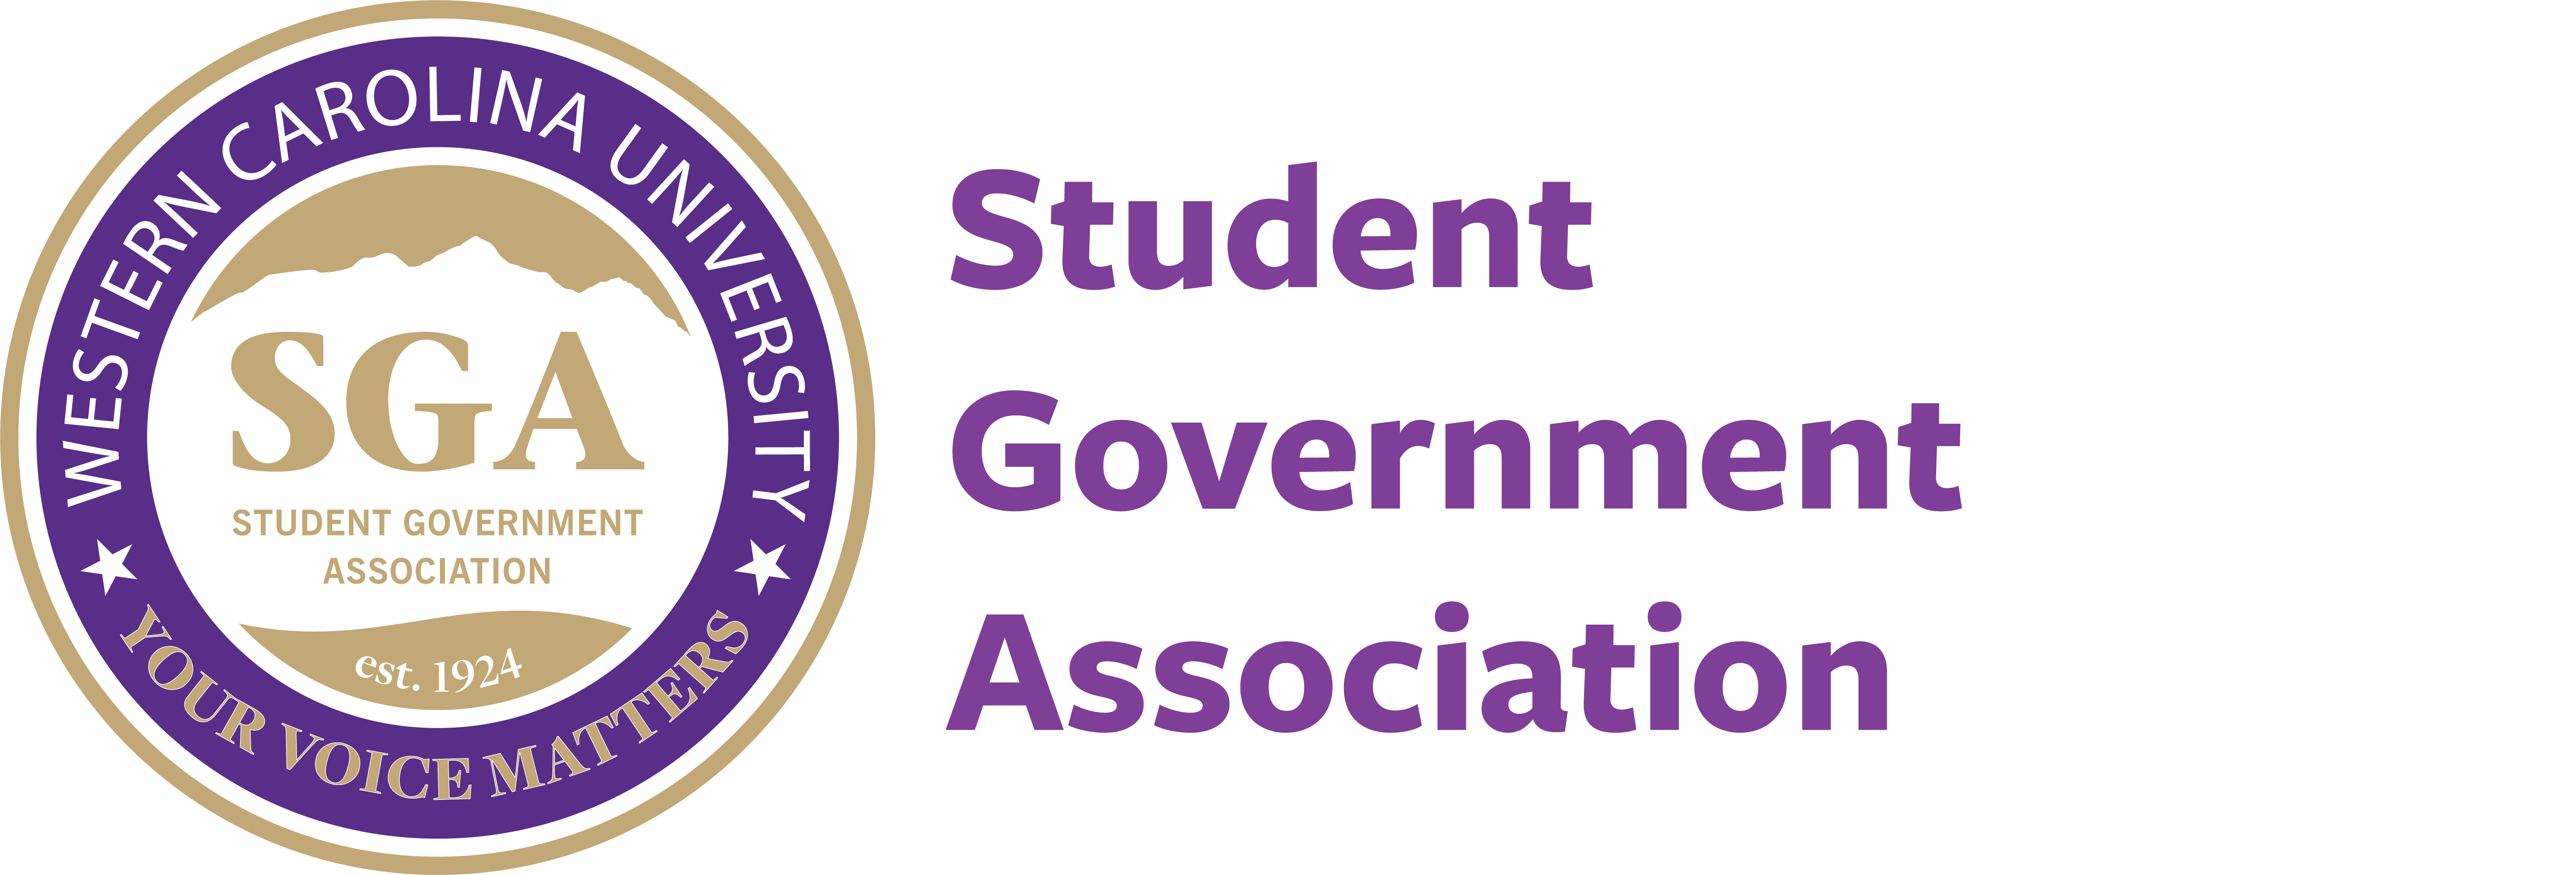 legislative-branch-wcu-student-government-association